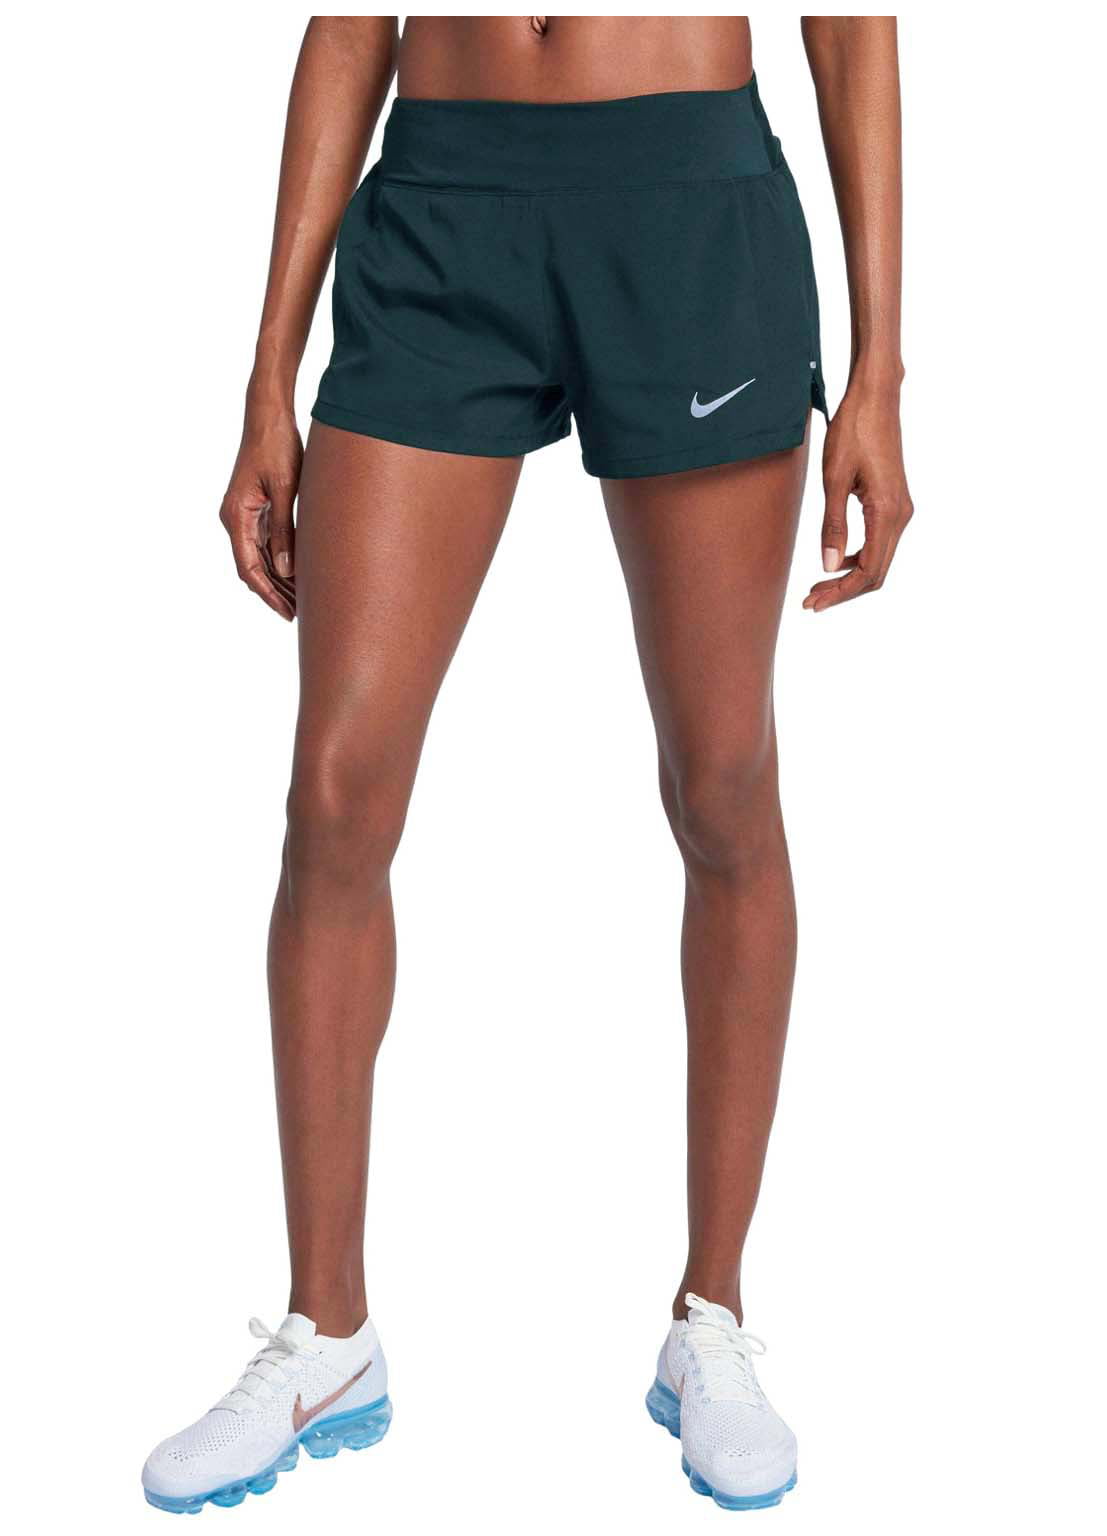 nike women's eclipse running shorts